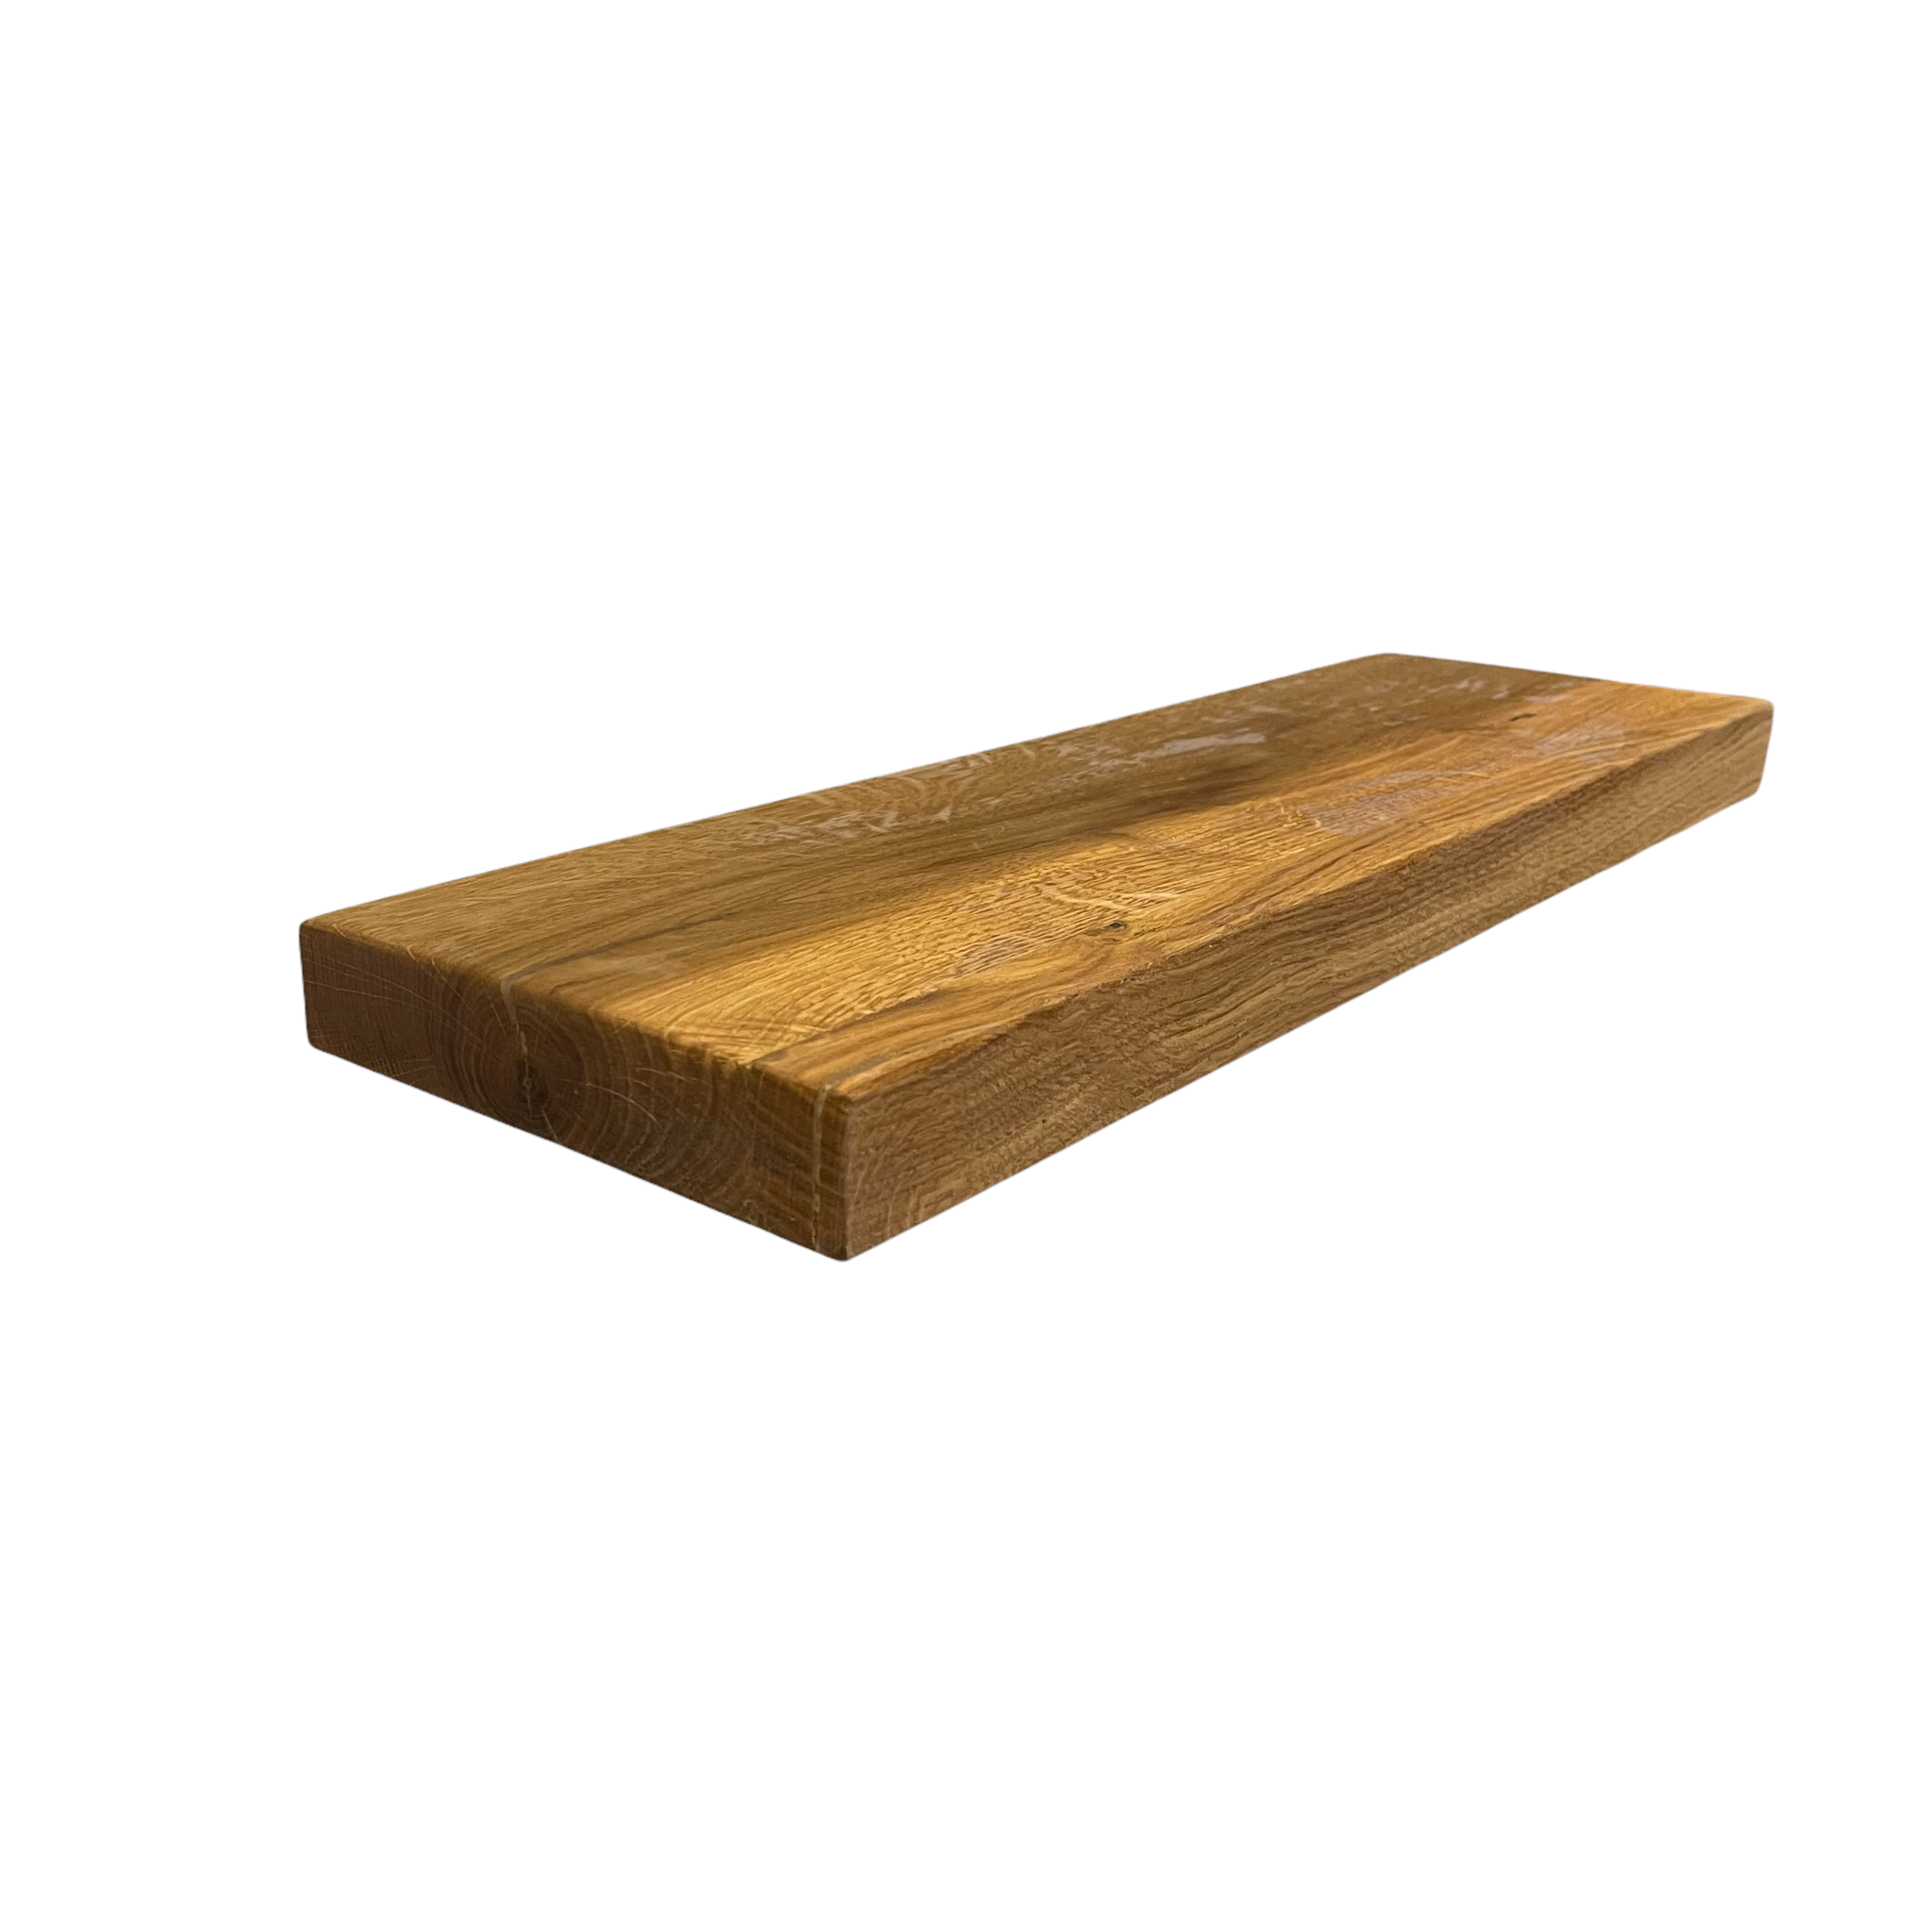 Wood & Work Houten wandplank  - Pure -  Groot - 4cm dik eiken - Recht